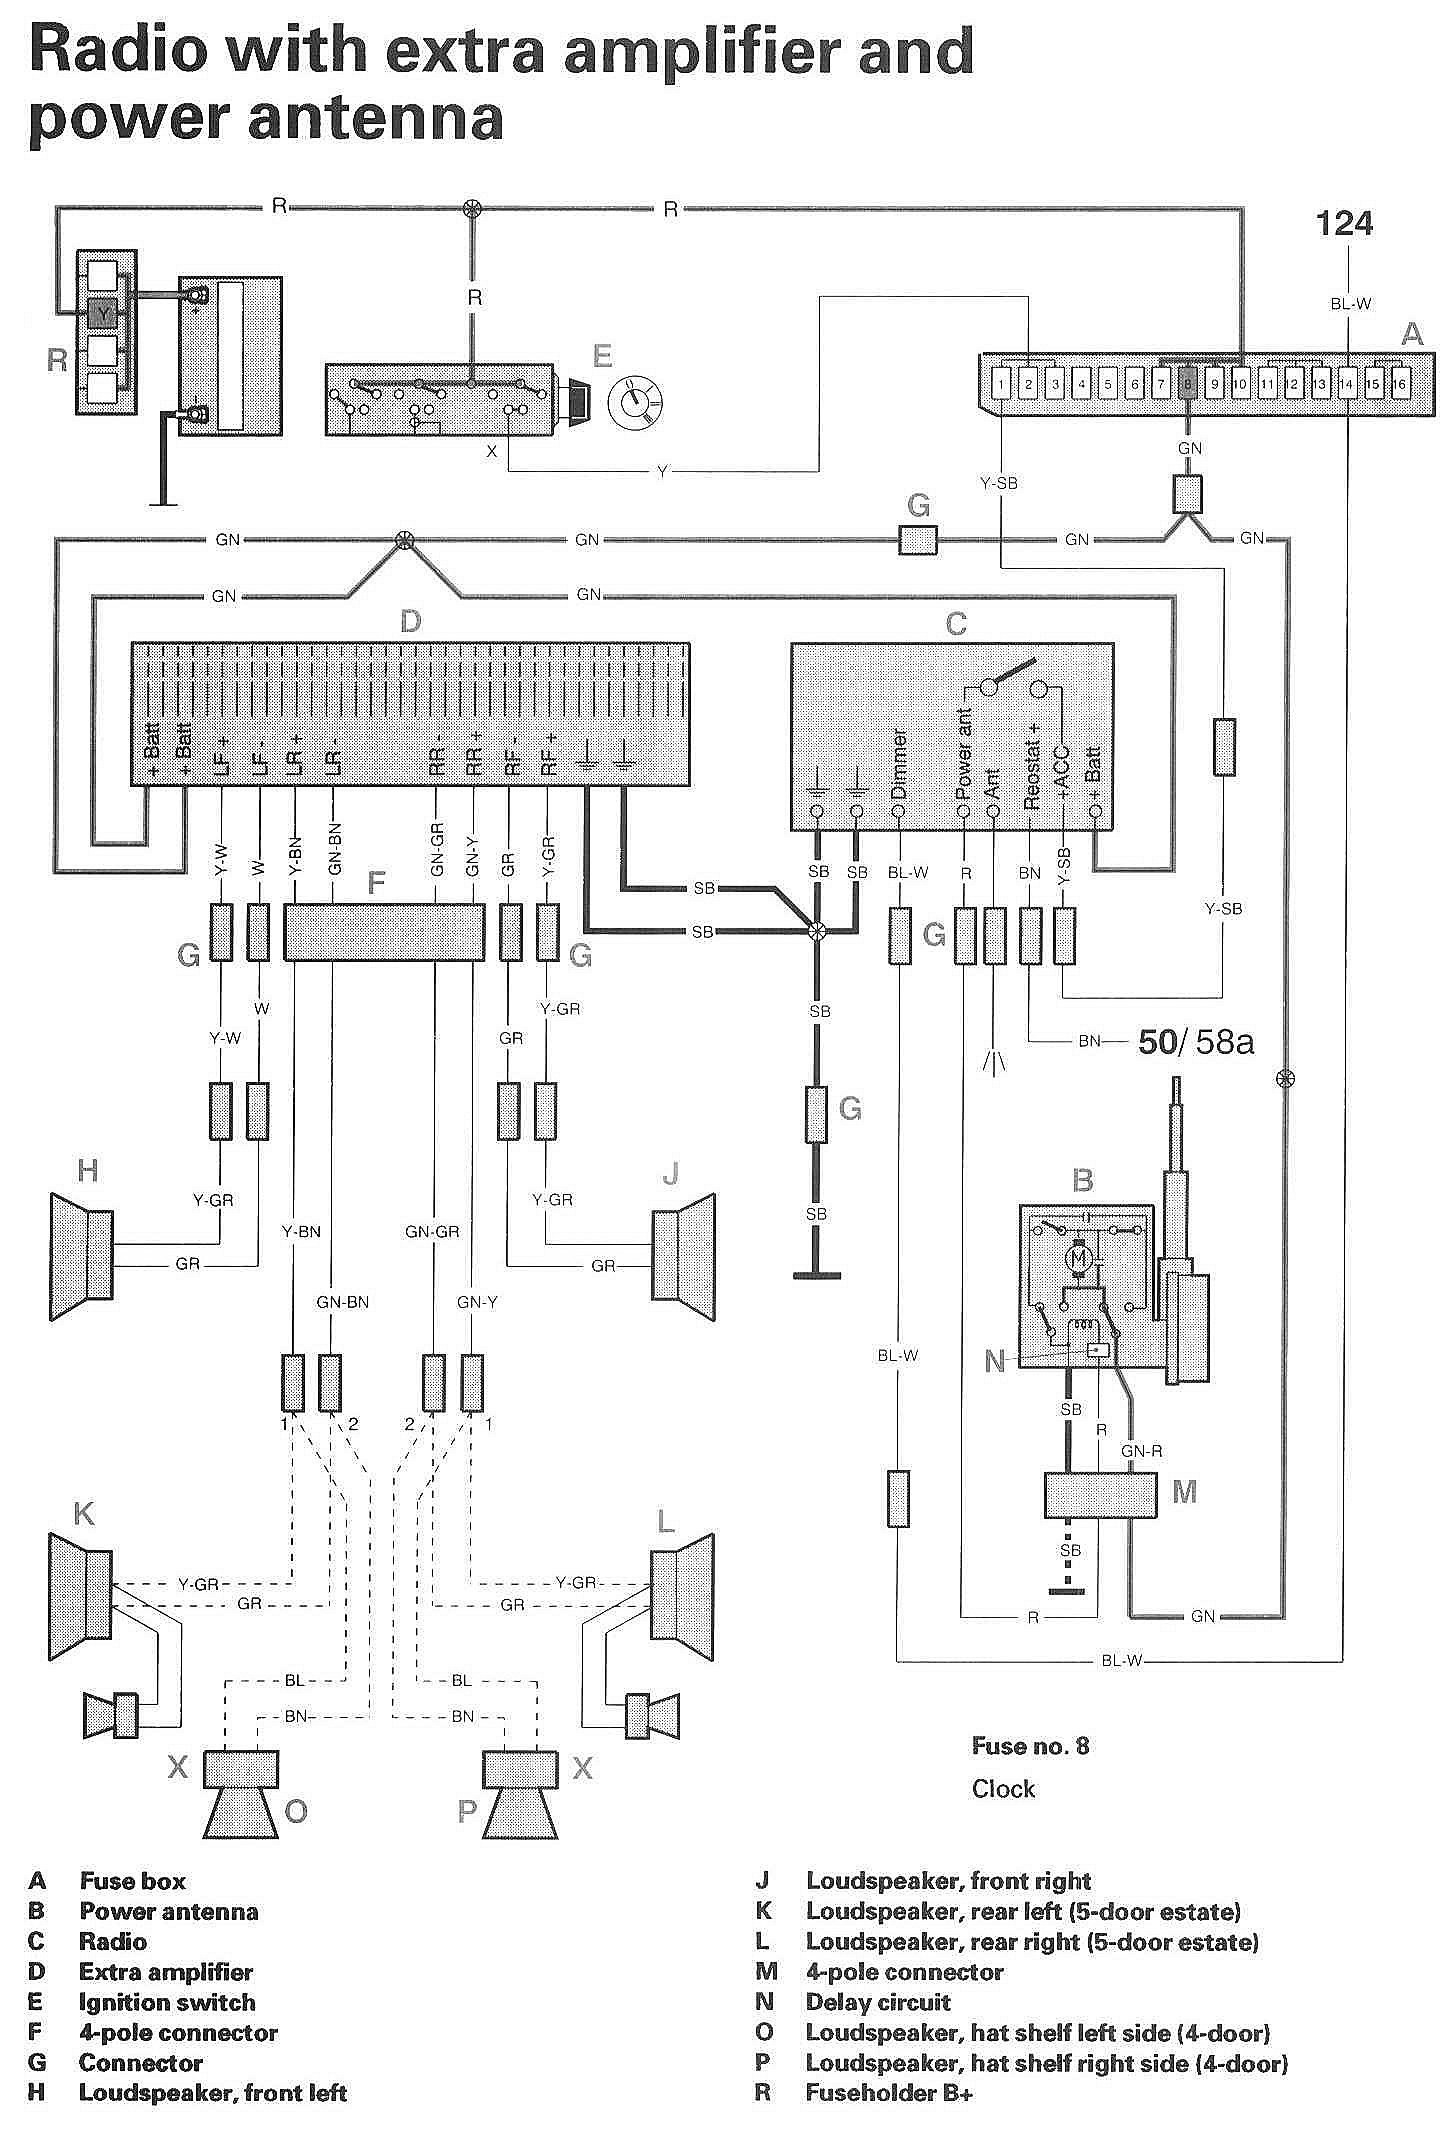 Daihatsu Fujitsu Ten Car Audio Wiring Diagram Volvo Auto Car Stereo Wiring Diagram Of Daihatsu Fujitsu Ten Car Audio Wiring Diagram